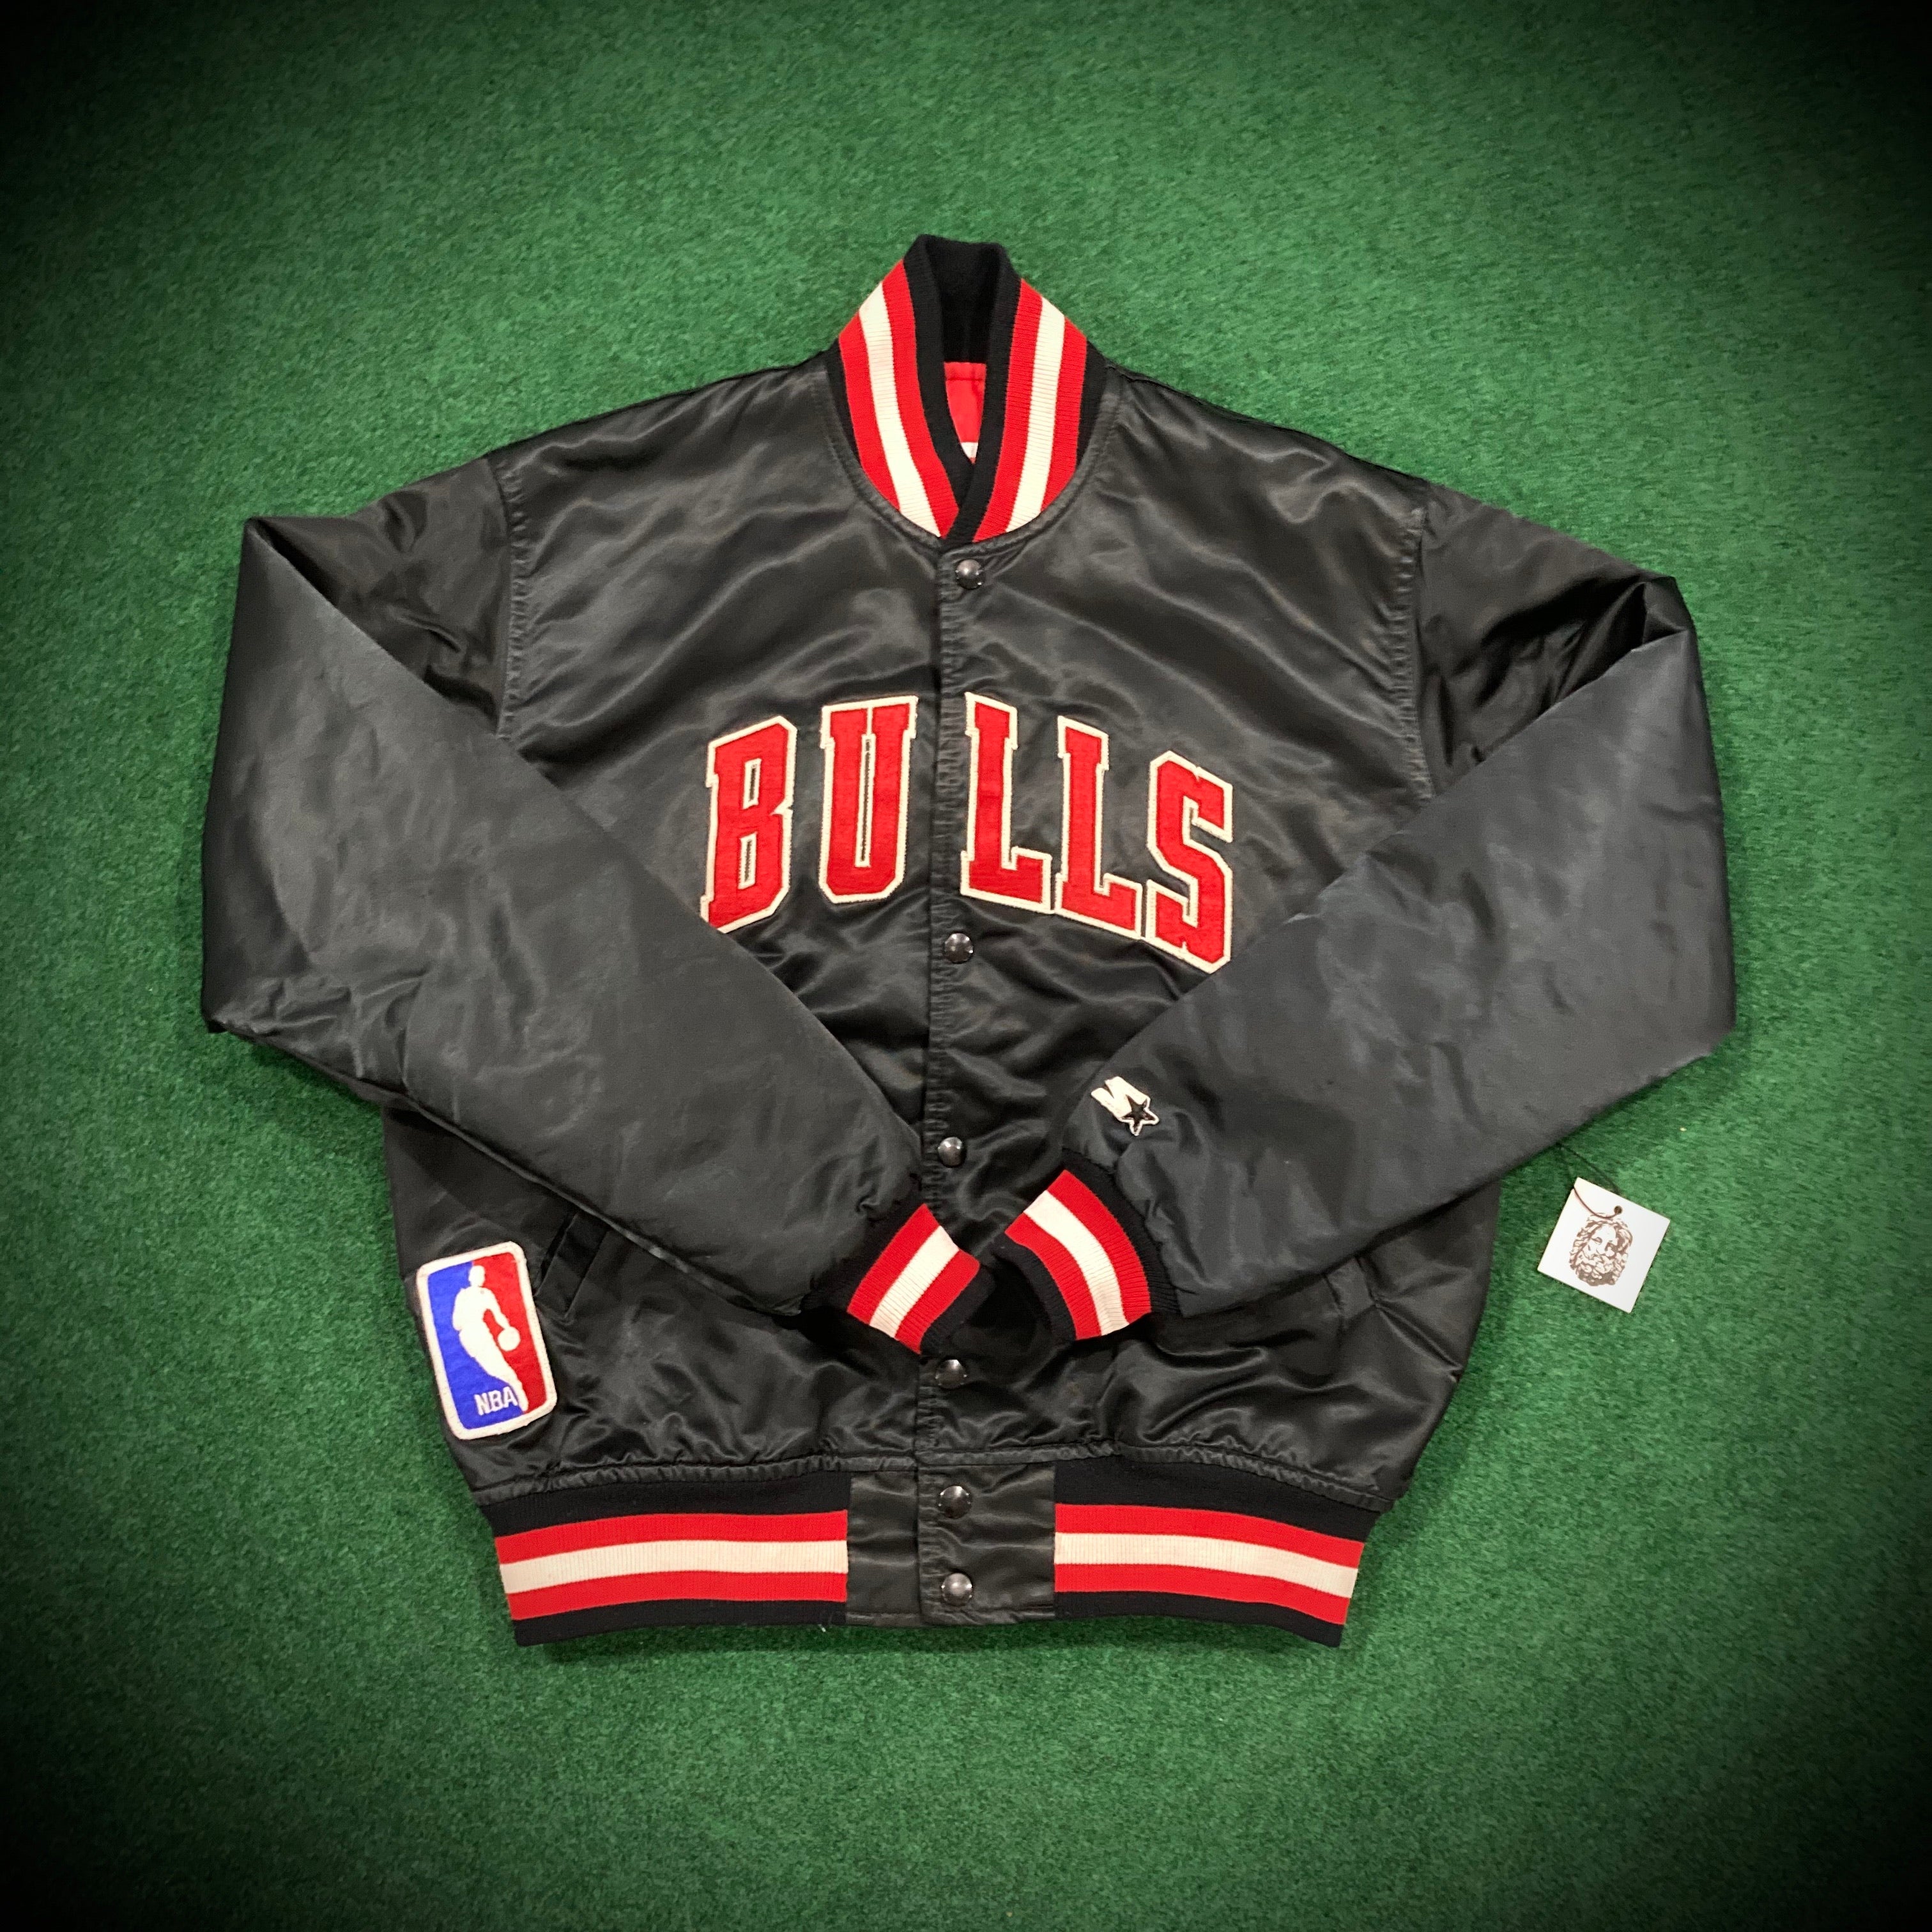 vintage chicago bulls leather jacket